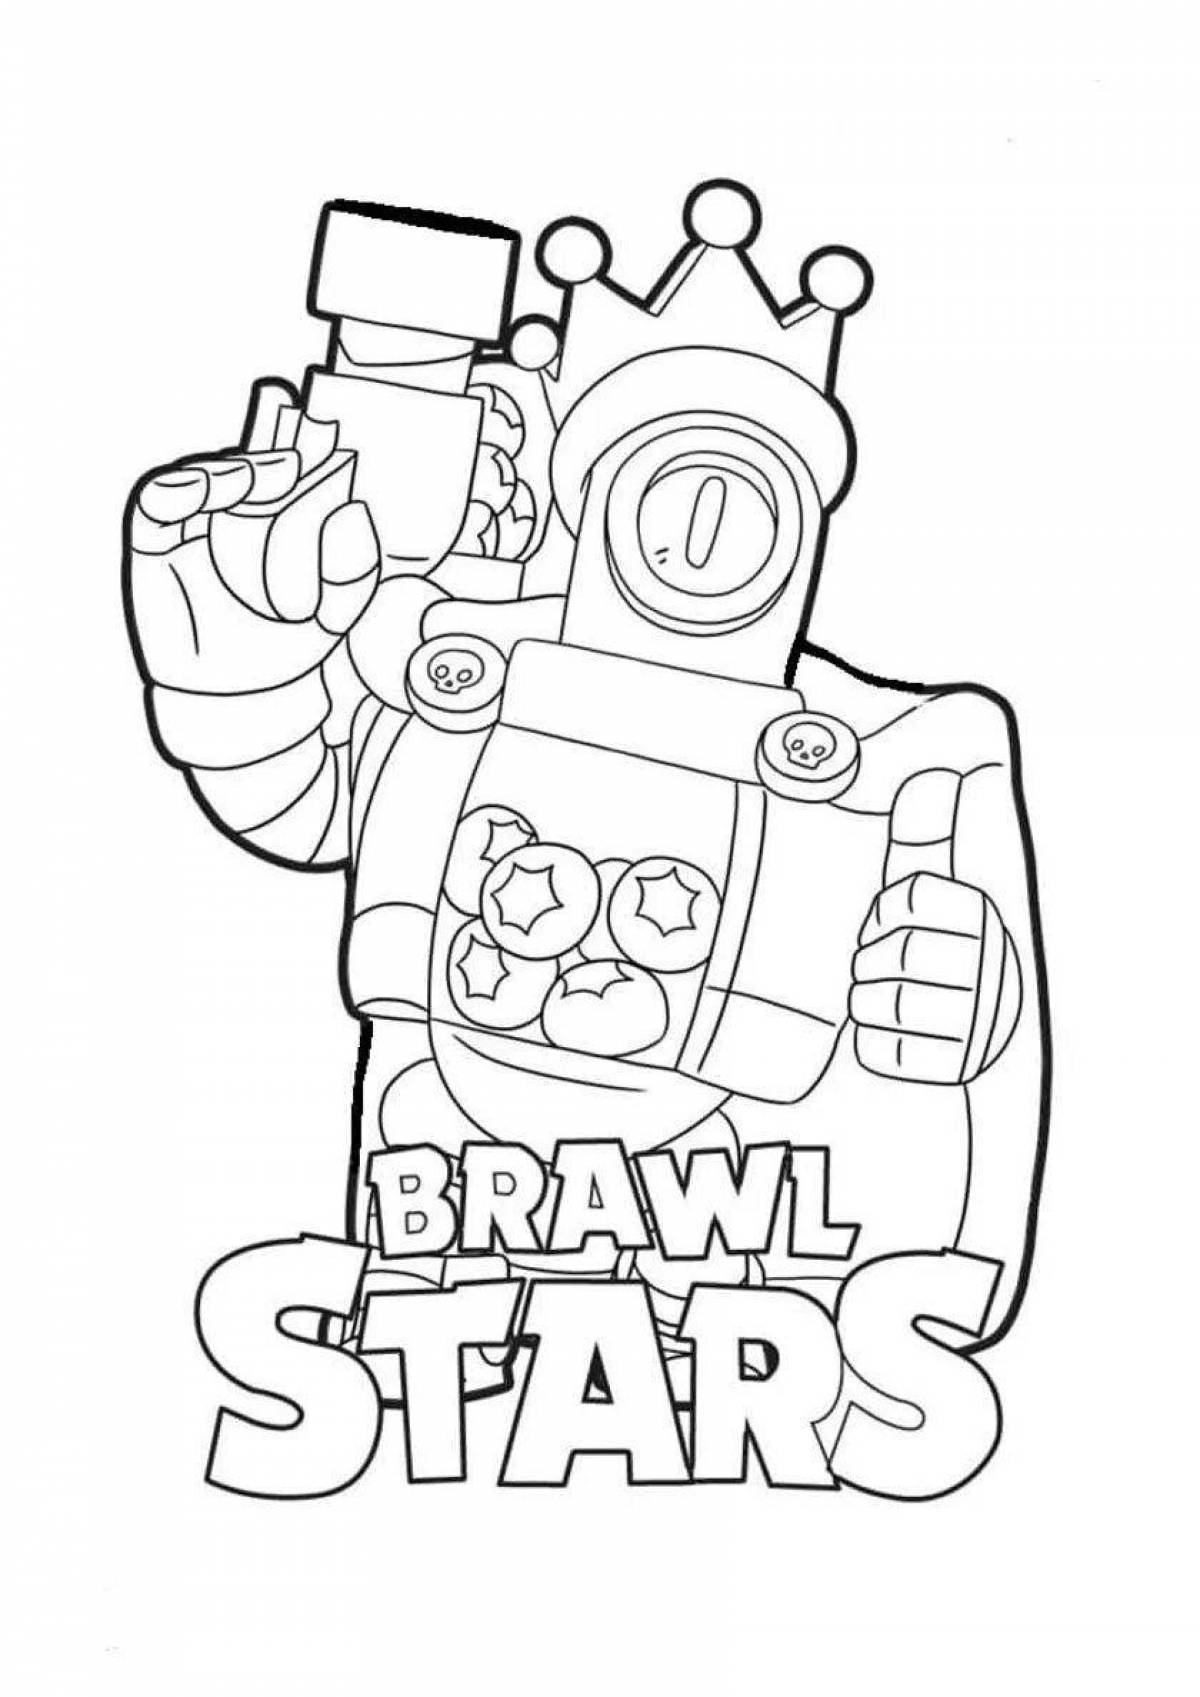 Bravo stars stylish coloring book